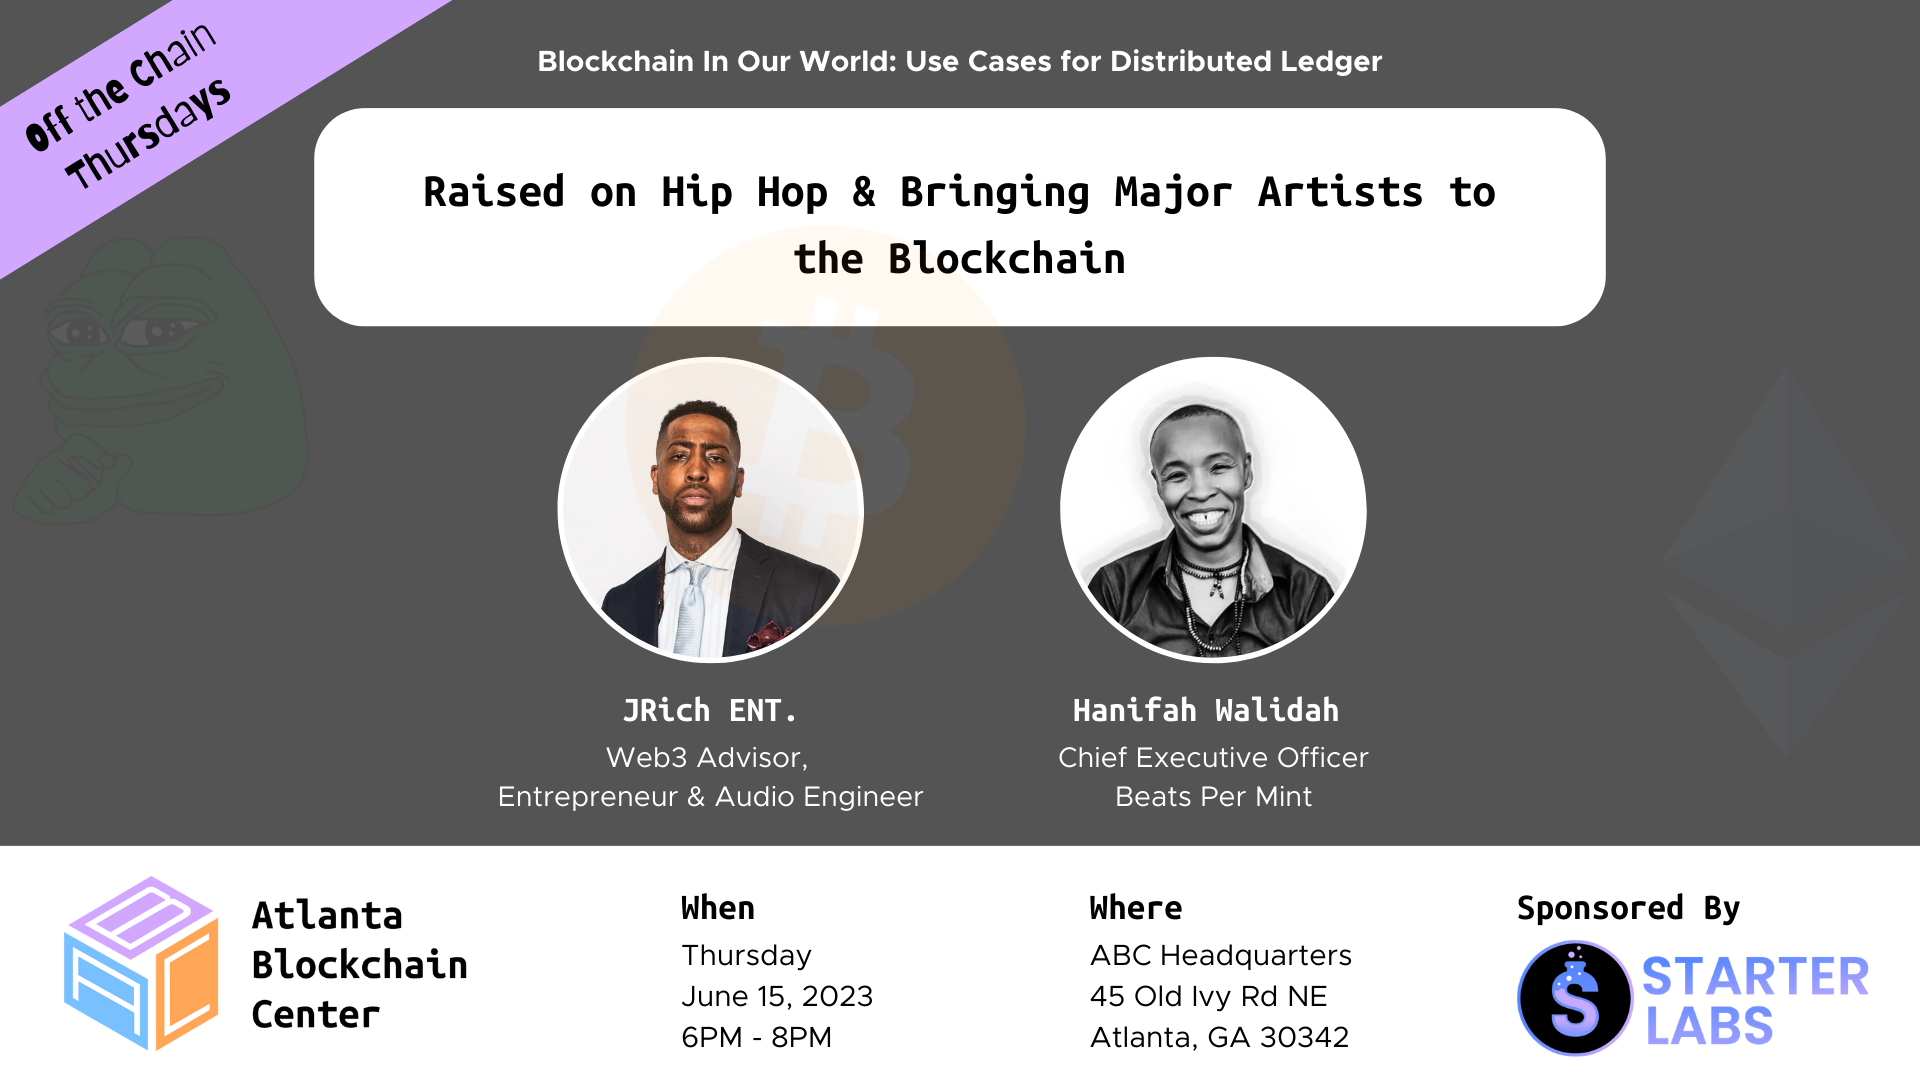 Raised on Hip Hop & Bringing Major Artists to the Blockchain